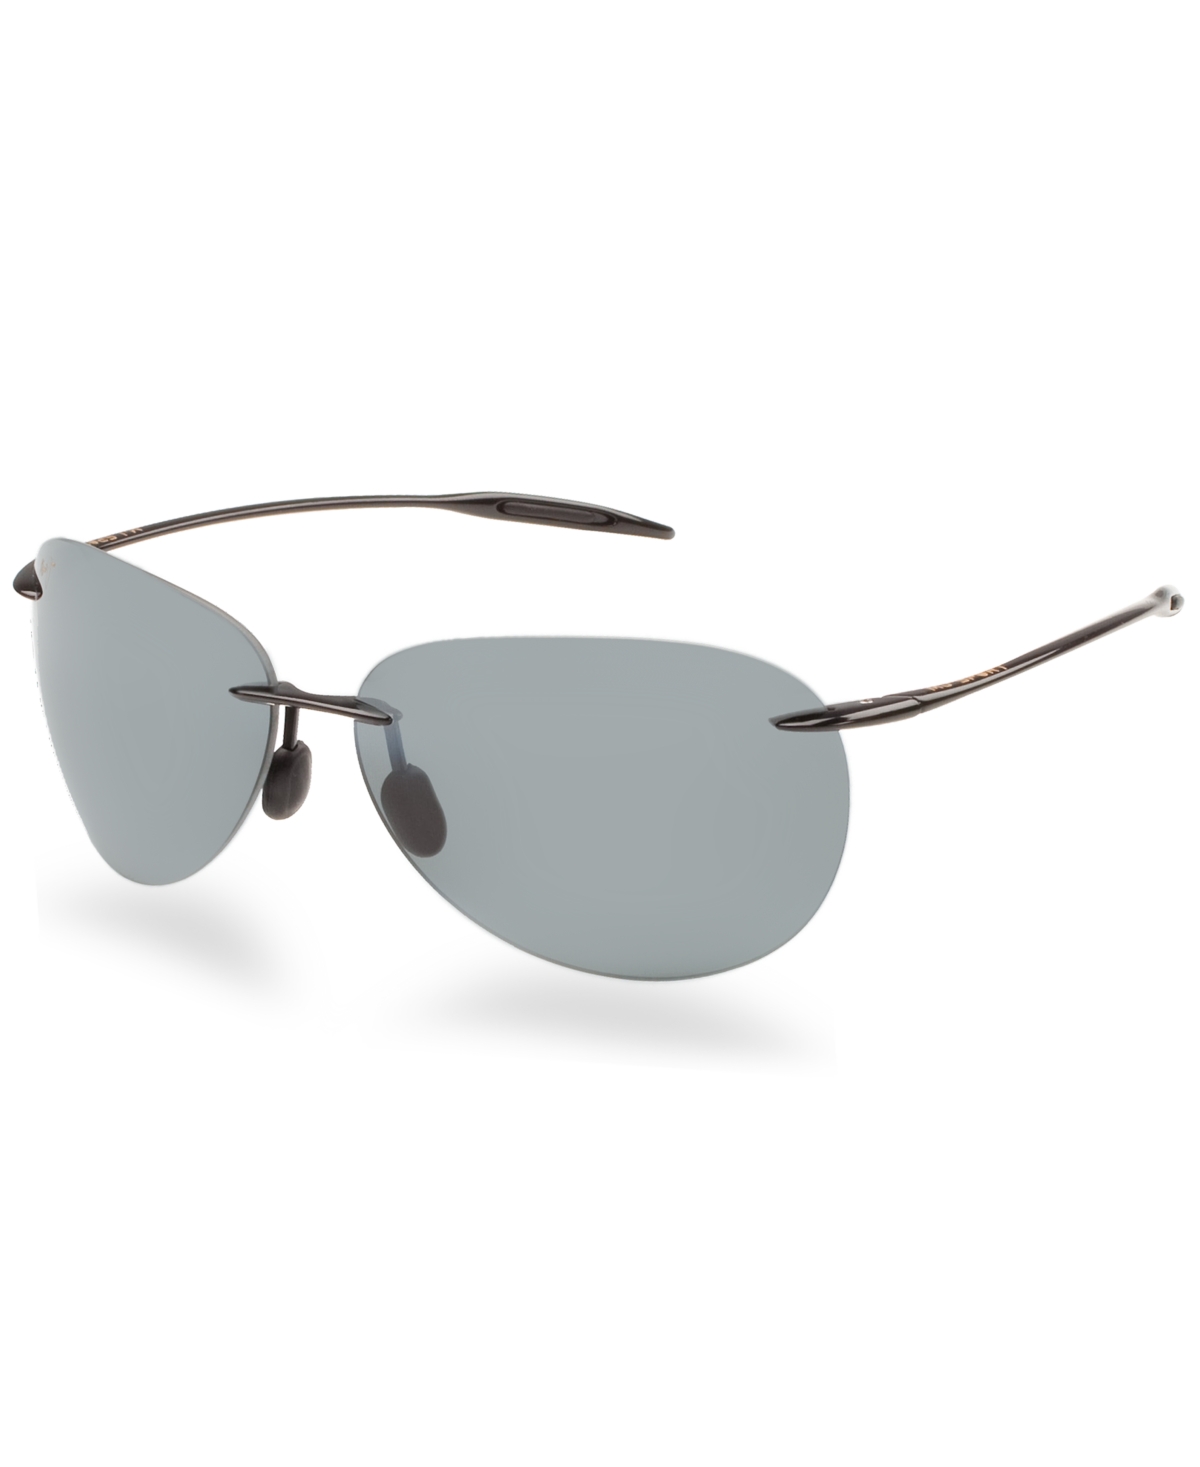 Polarized Sugar Beach Sunglasses, 421 - BLACK SHINY/GREY